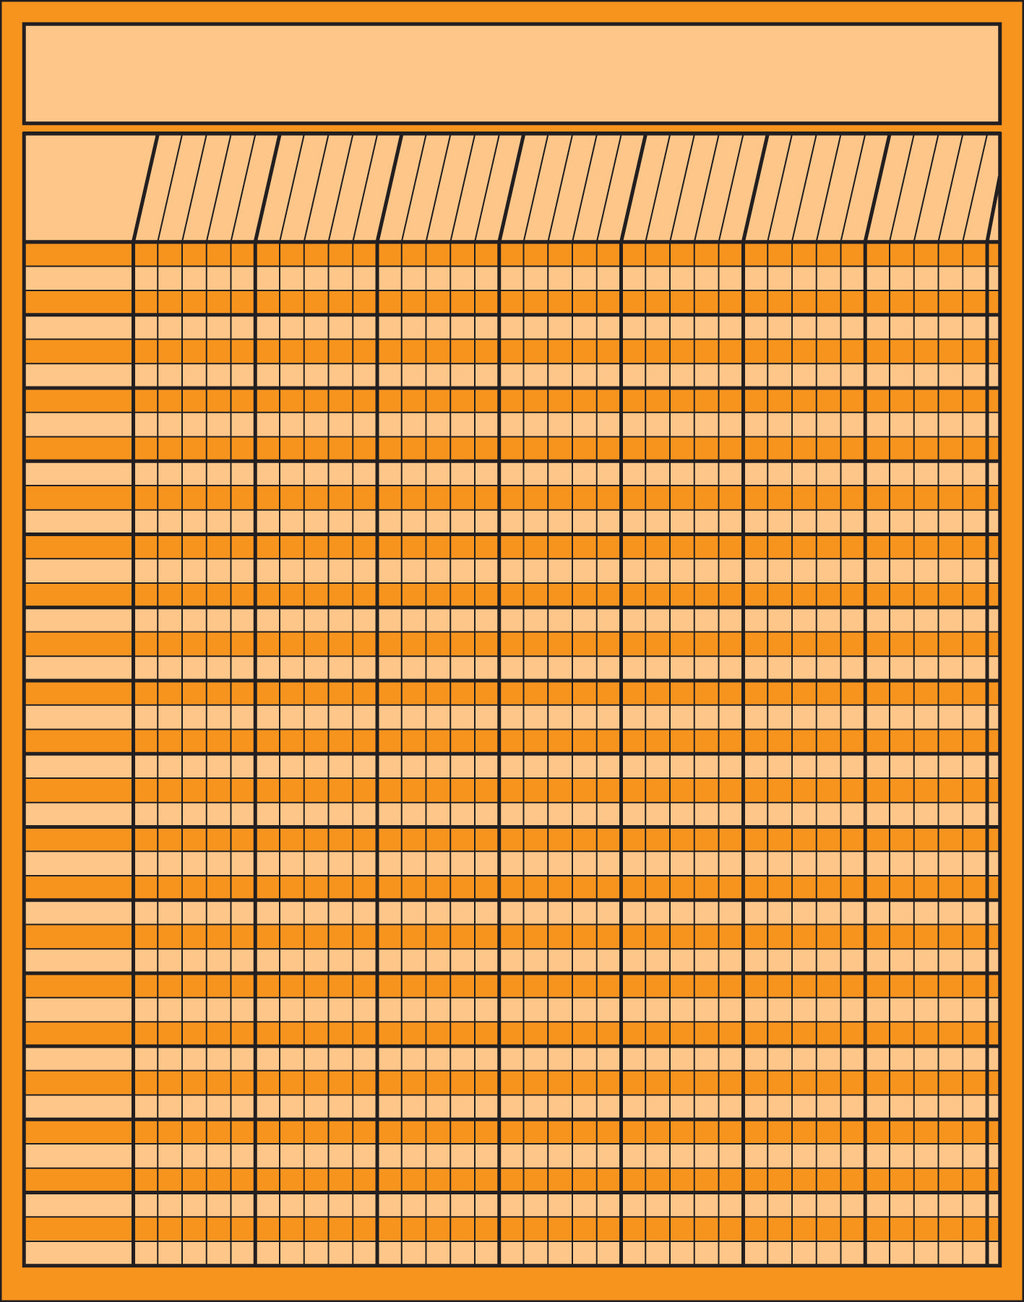 Vertical Chart - Orange - Creative Shapes Etc.